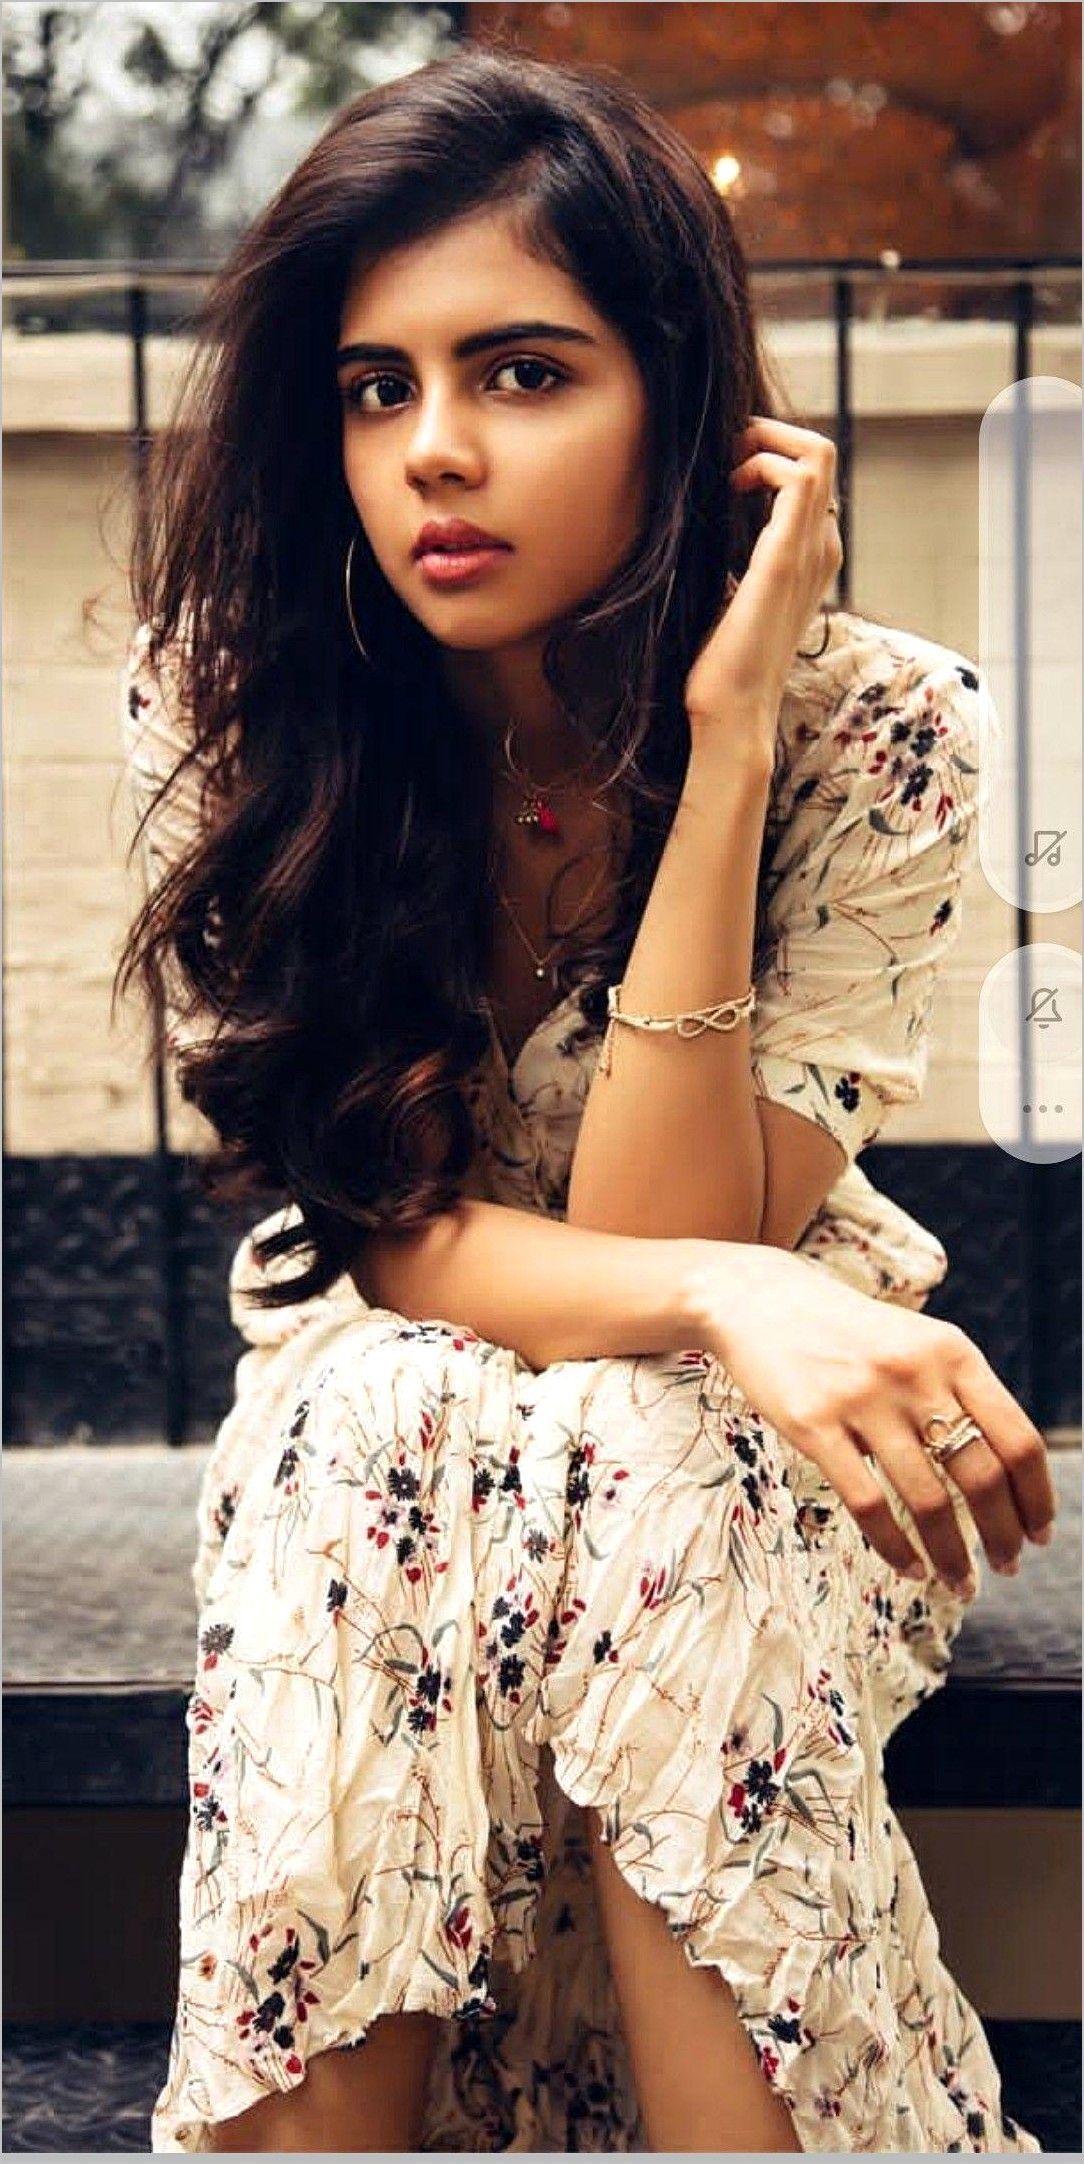 4k Wallpaper Indian Actress. Stylish girl, Stylish girl image, Stylish girl pic